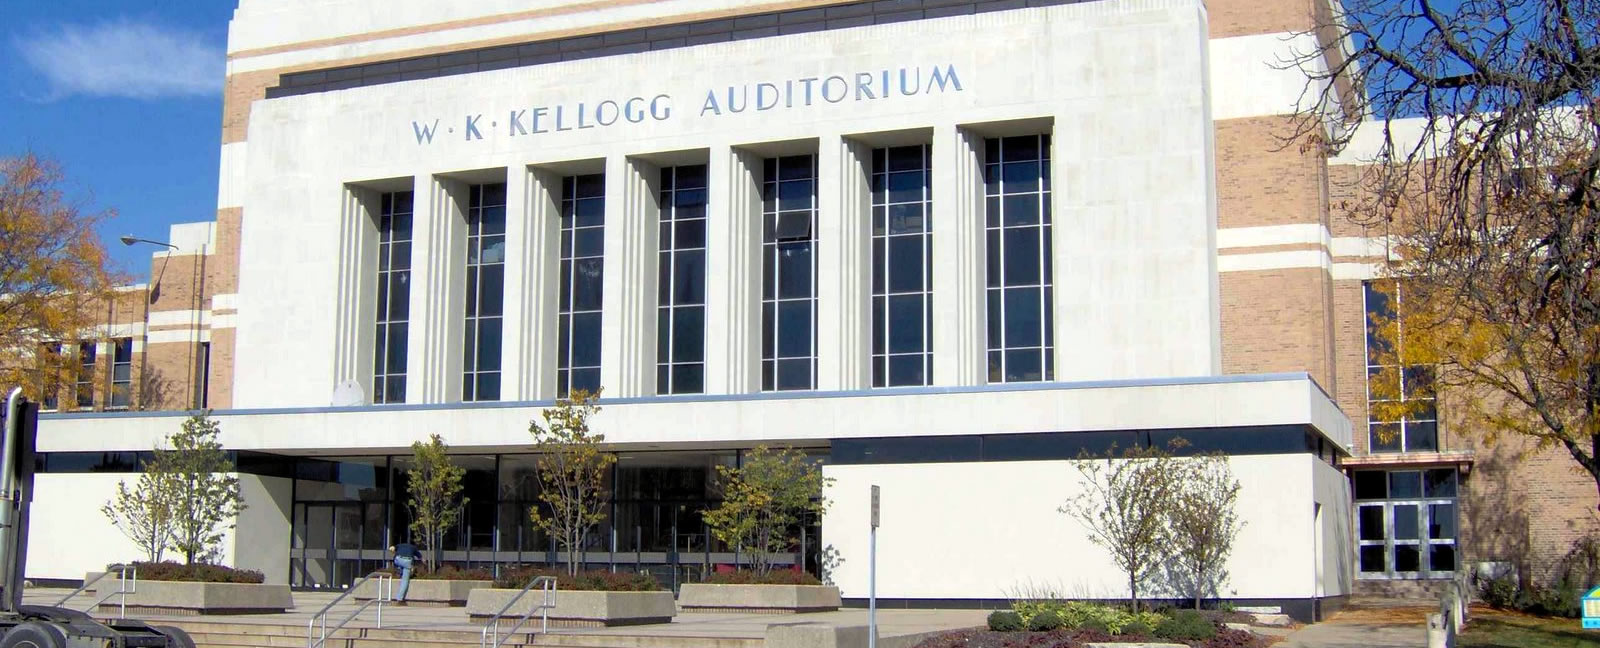 W K Kellogg Auditorium – by Robert Maihofer II